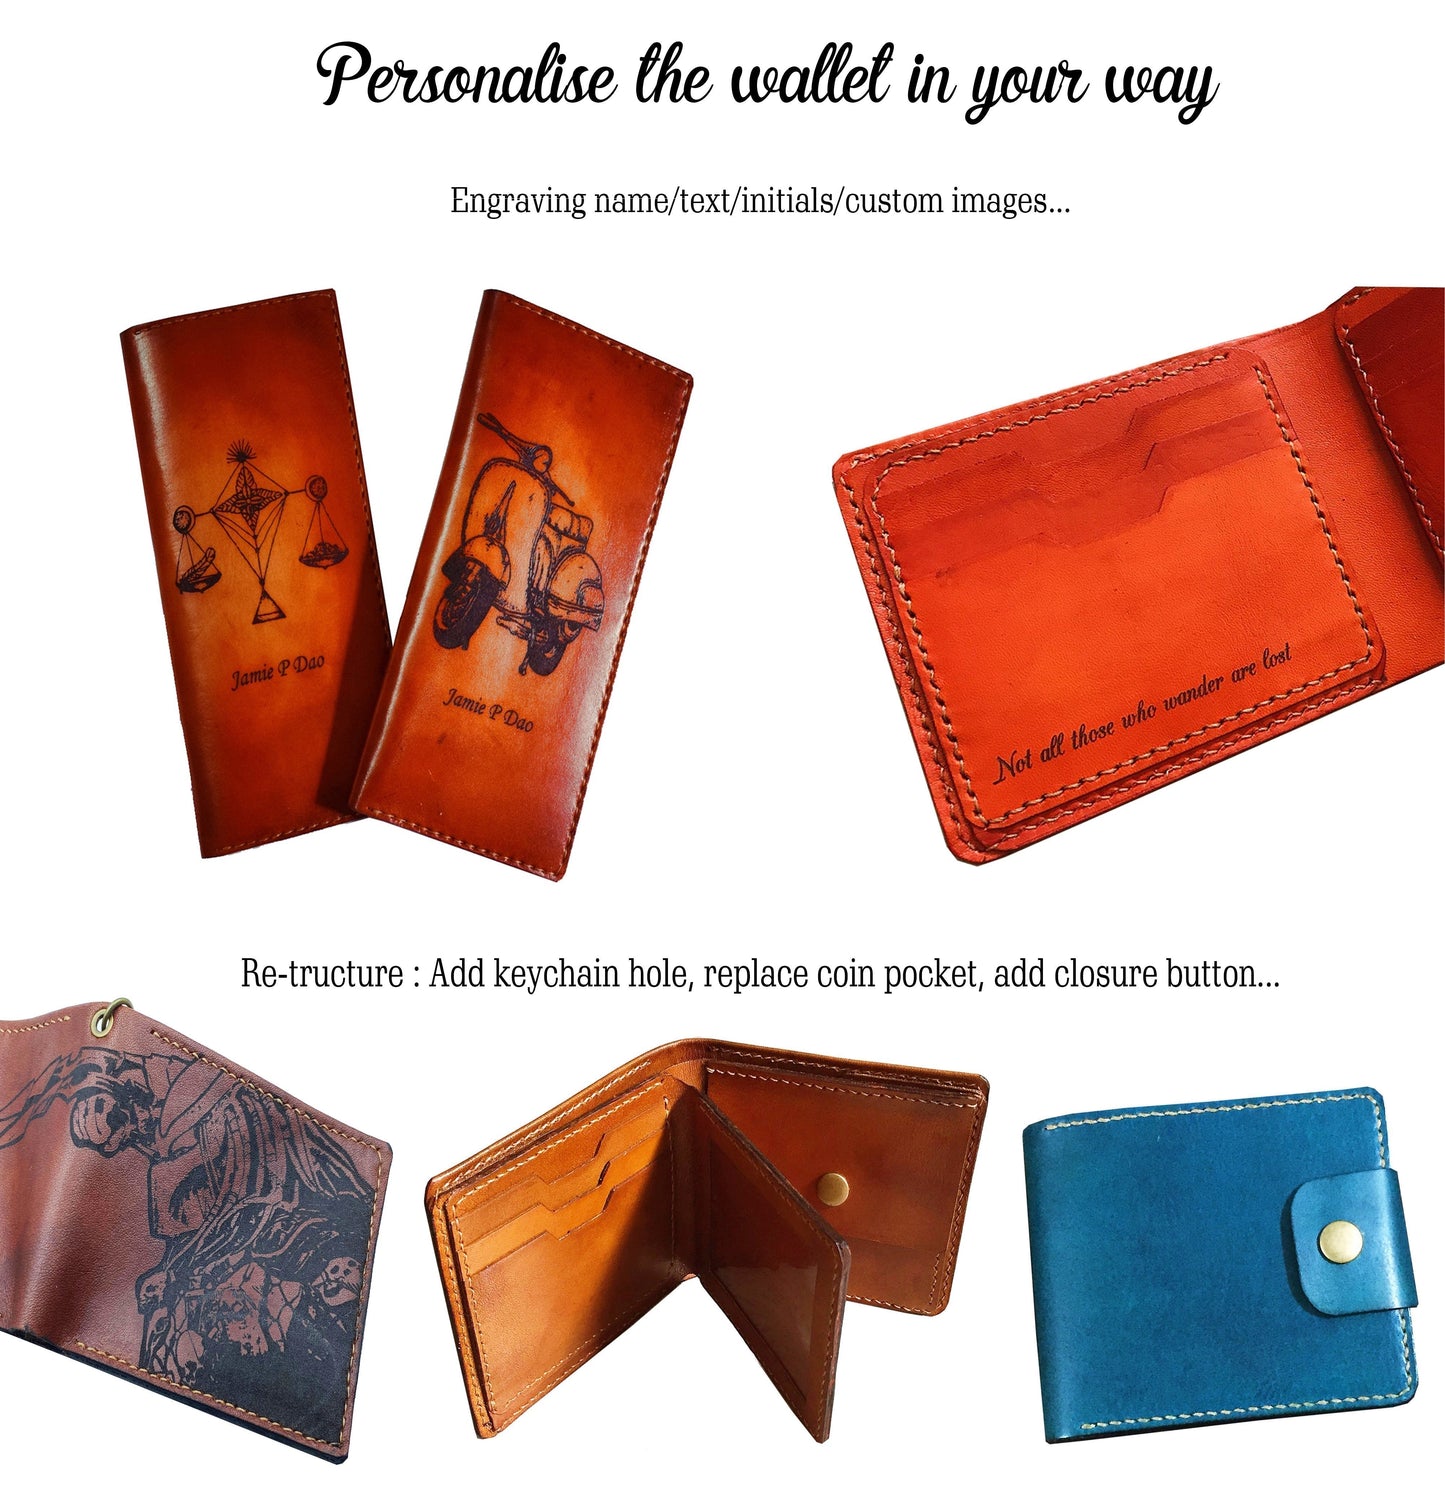 Personalized leather men's wallet, catus shape art present, plant inspired men's wallet